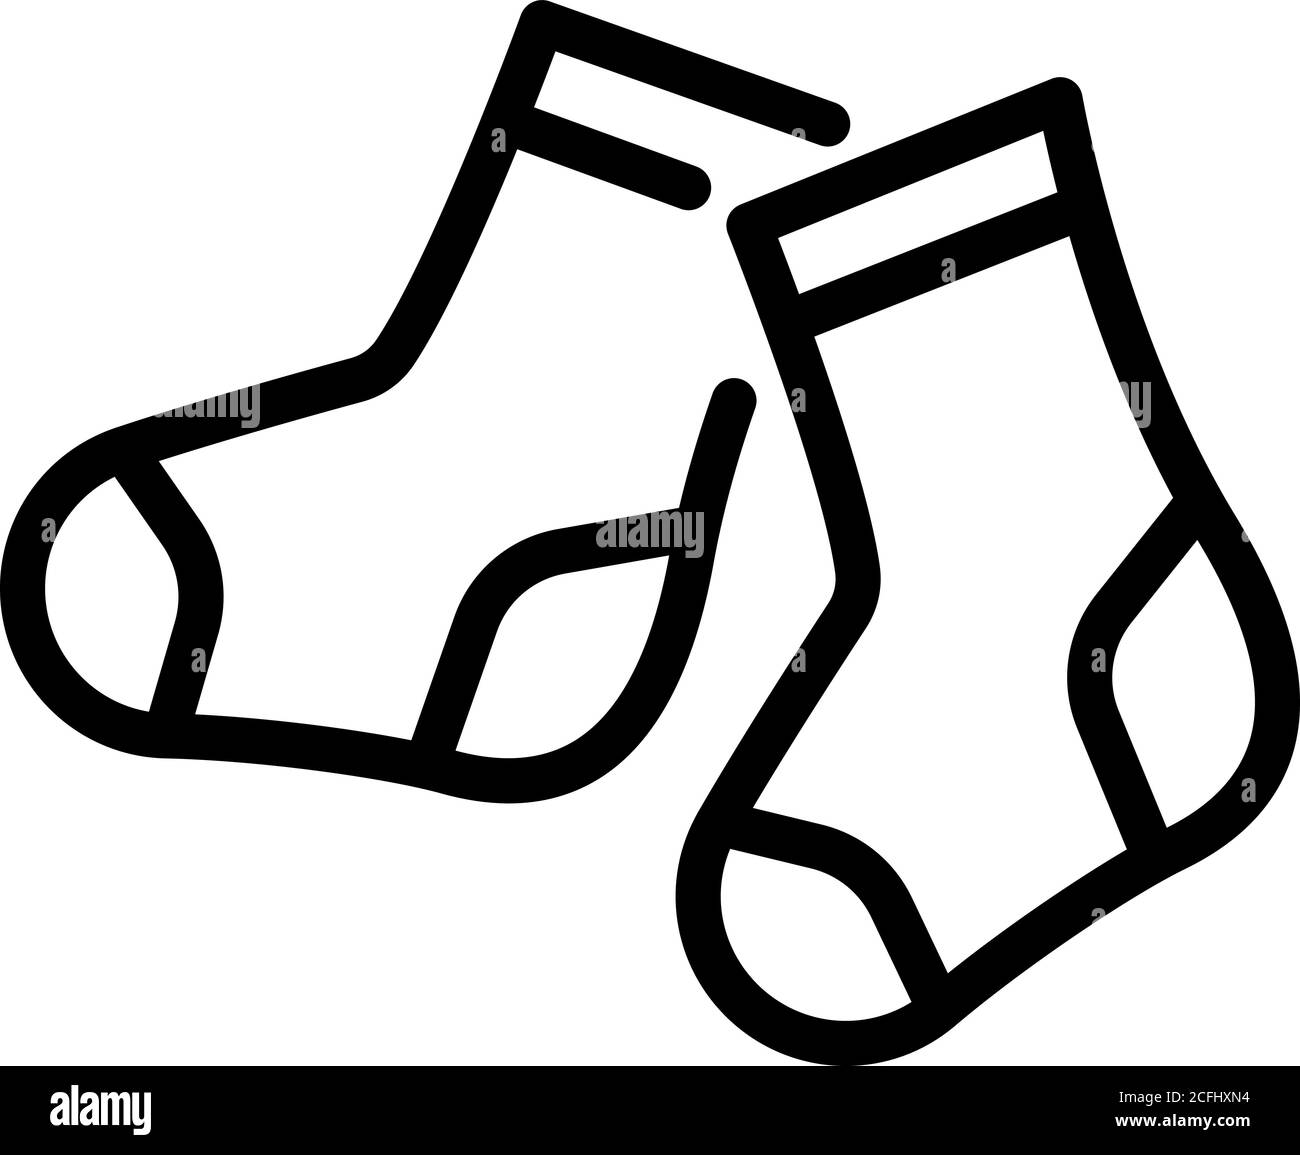 Baby socks sketch icon Royalty Free Vector Image